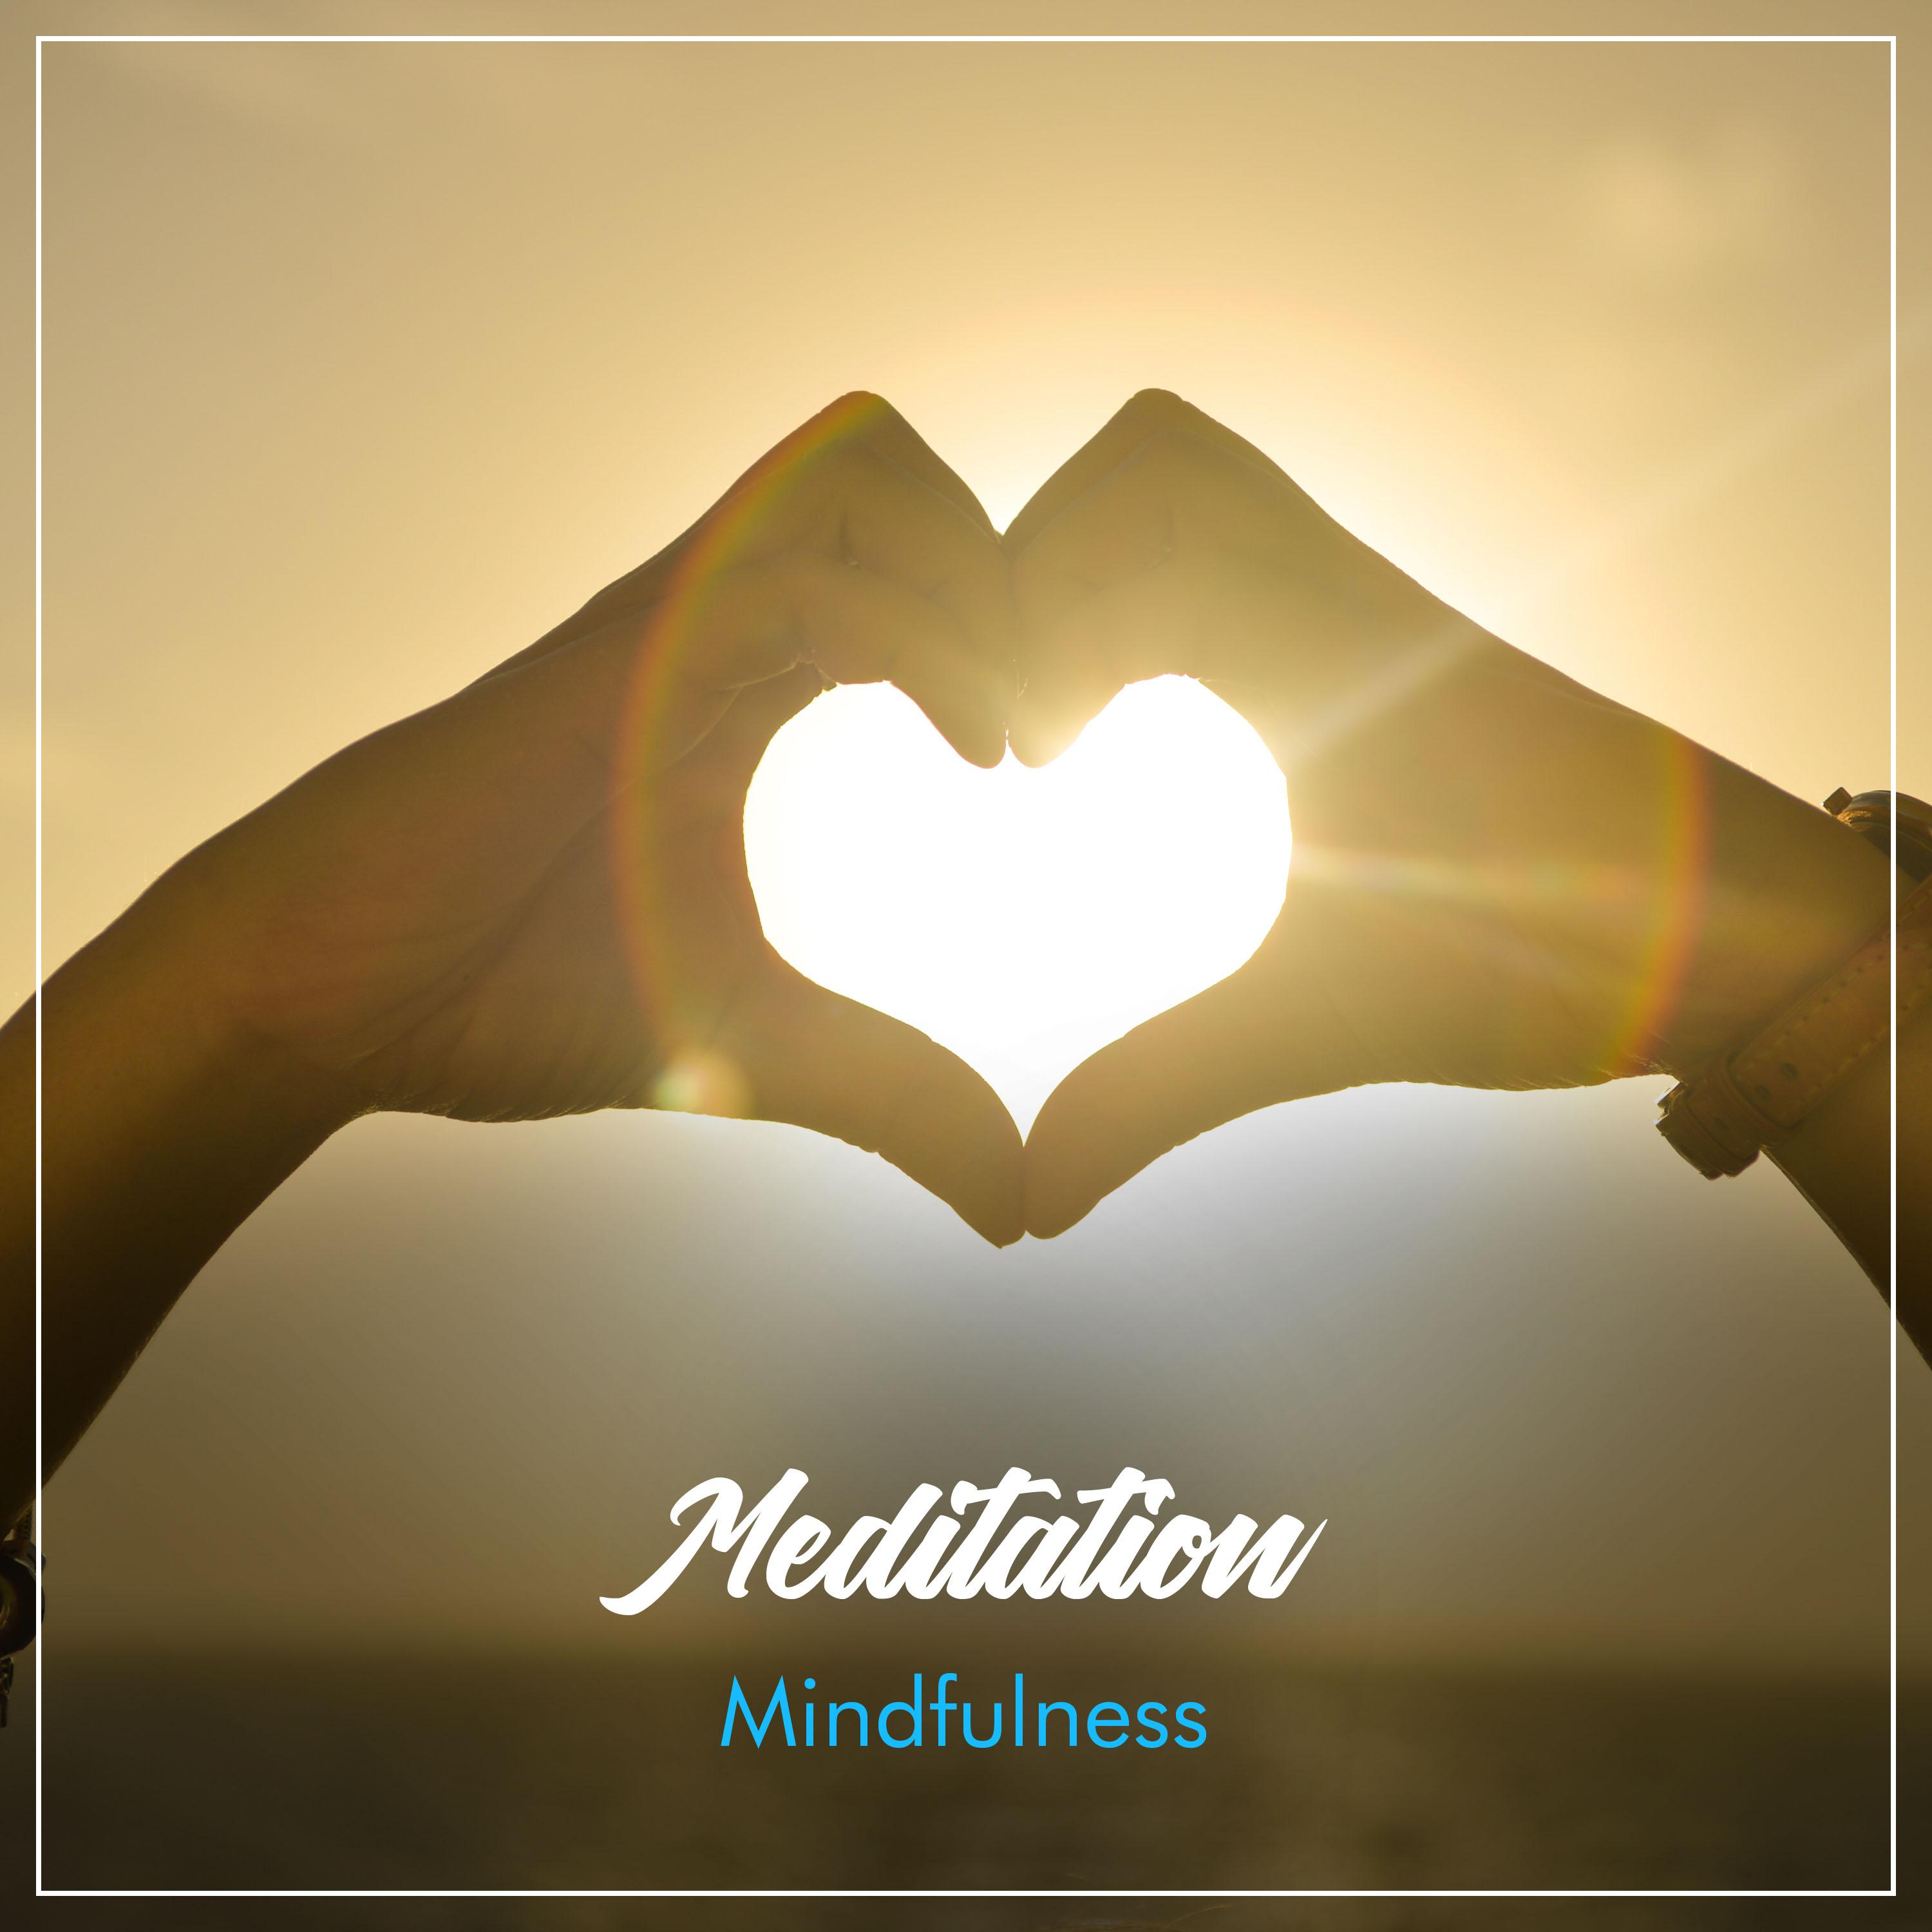 12 Meditation and Mindfulness Compilation